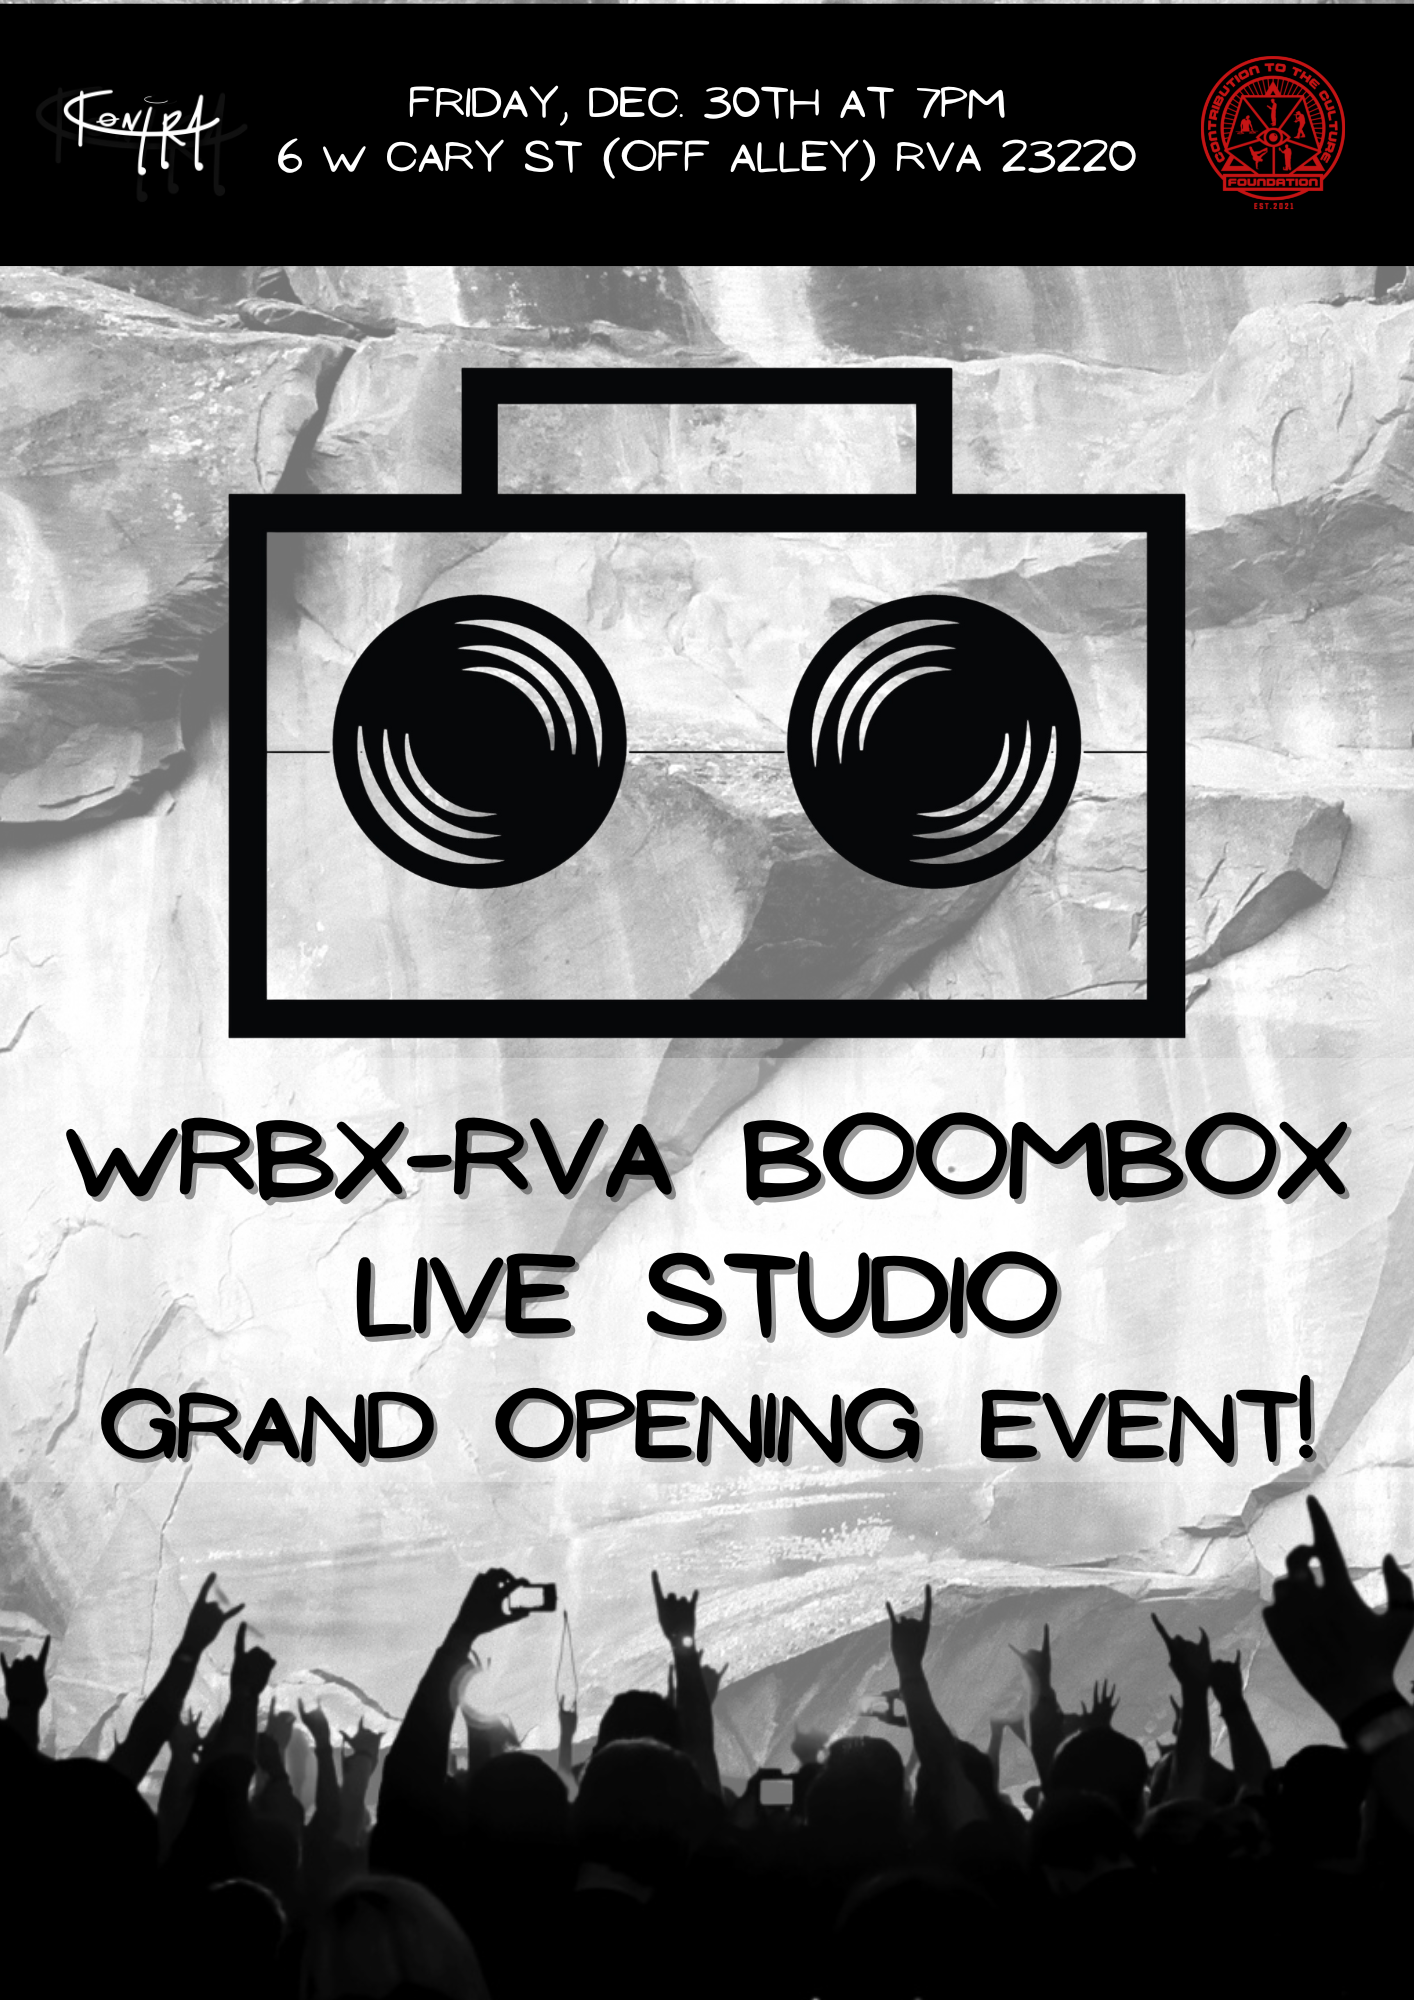 WRBX-RVA Boombox Live Broadcast Studio Grand Opening on dic. 31, 20:00@WRBX-RVA Boombox Live Broadcast Studio - Buy tickets and Get information on WRBX-RVA Boombox 